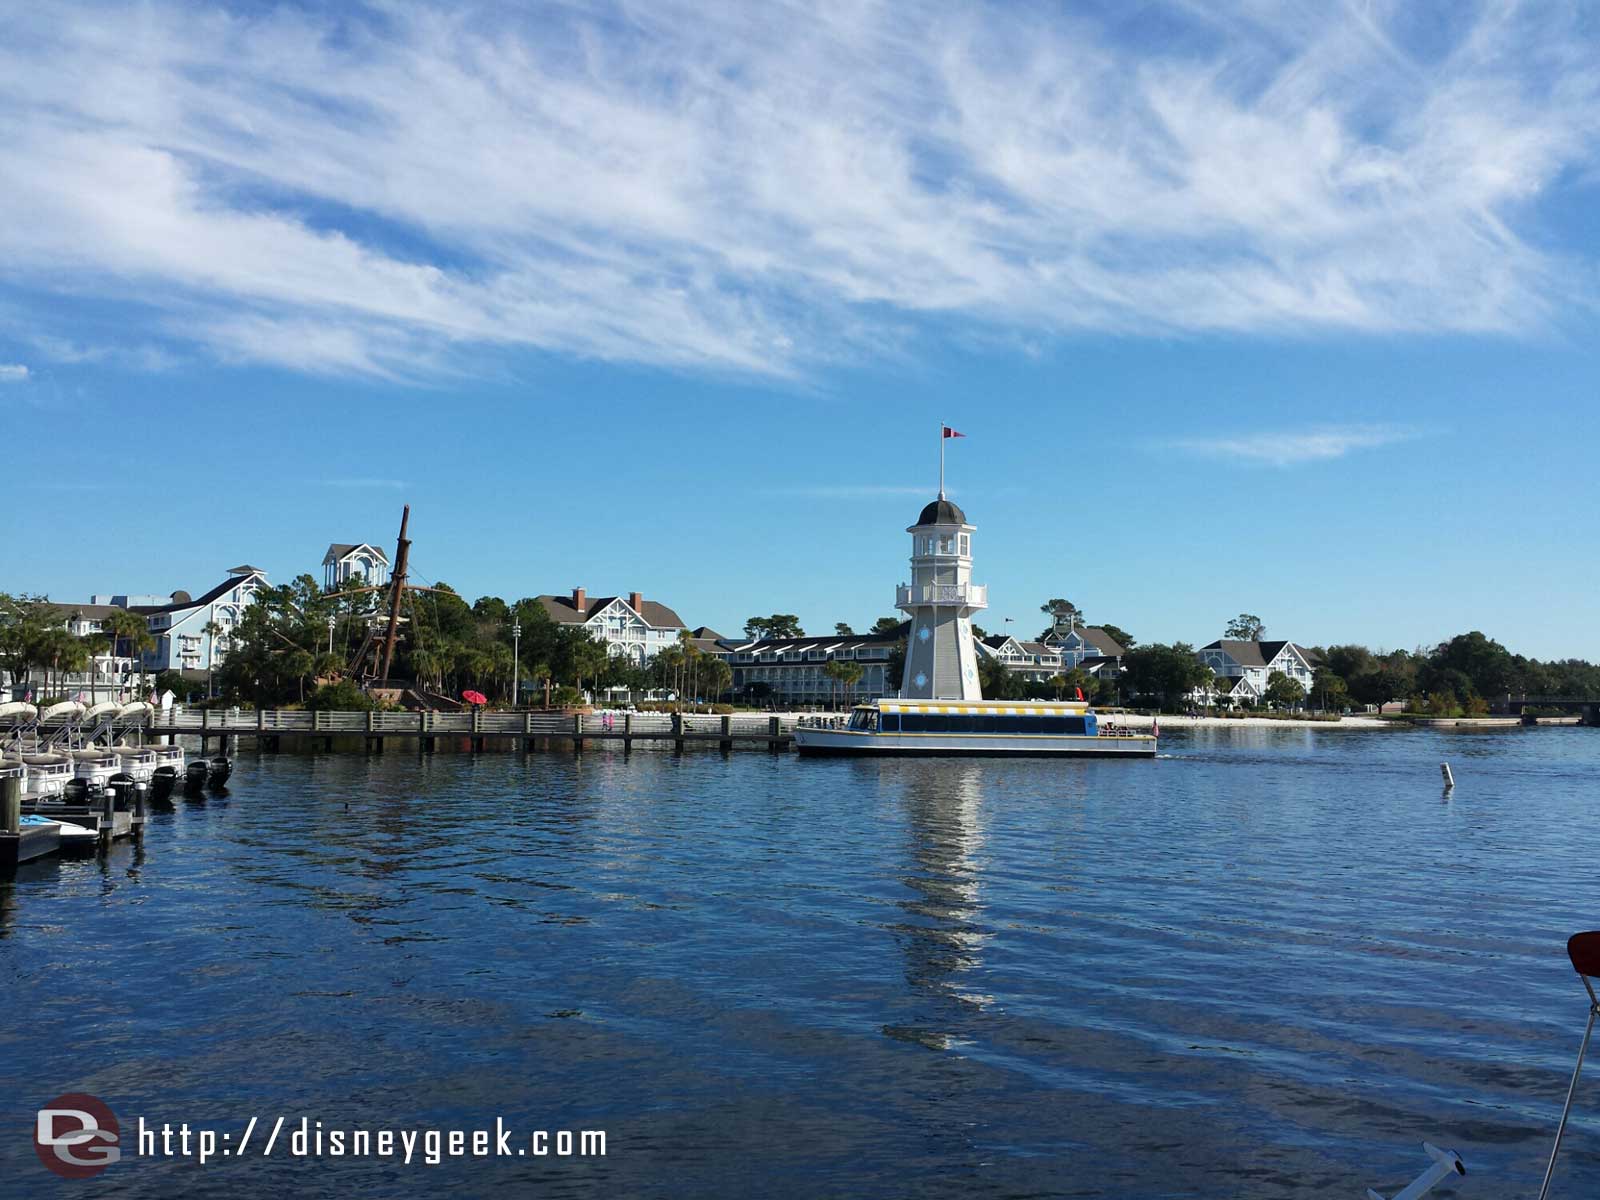 The Disney's Yacht Club Resort dock/lighthouse